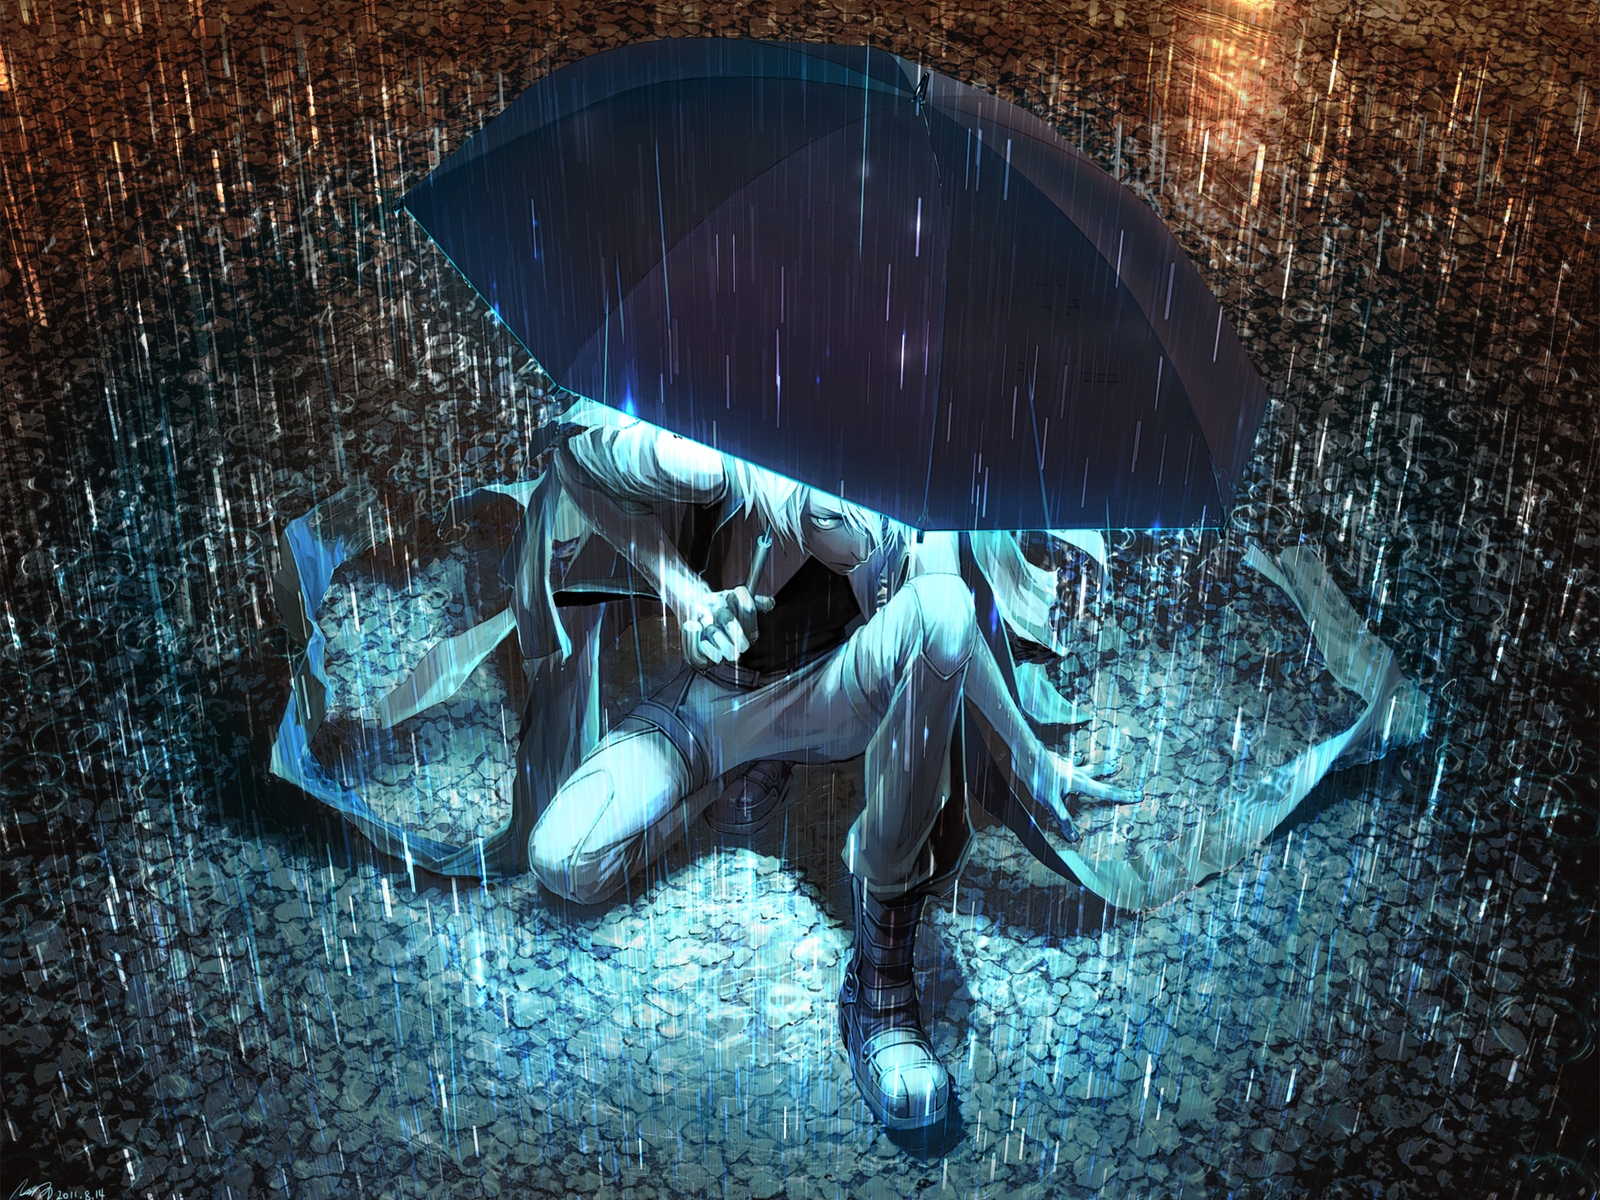 Knight Under the Umbrella for 1600 x 1200 resolution